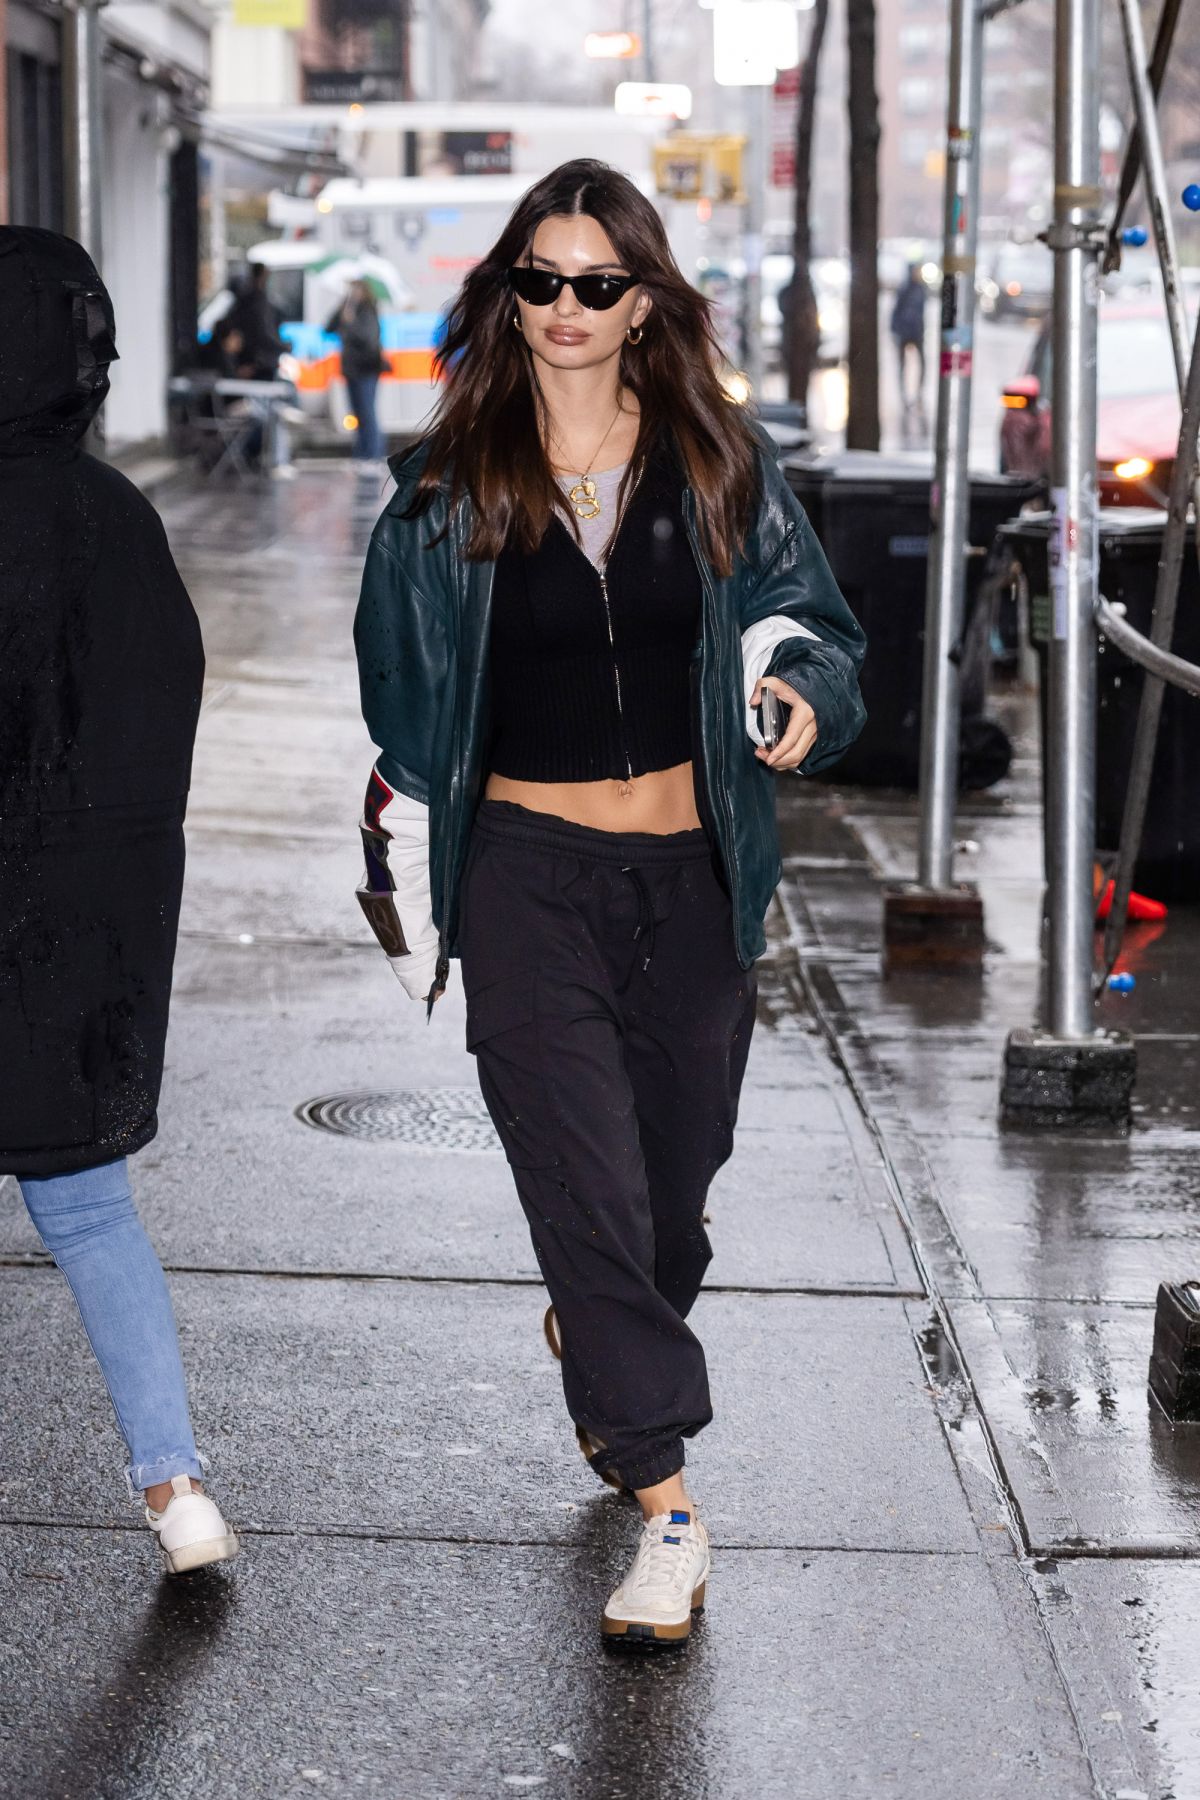 Emily Ratajkowski in leather jacket in NYC 2